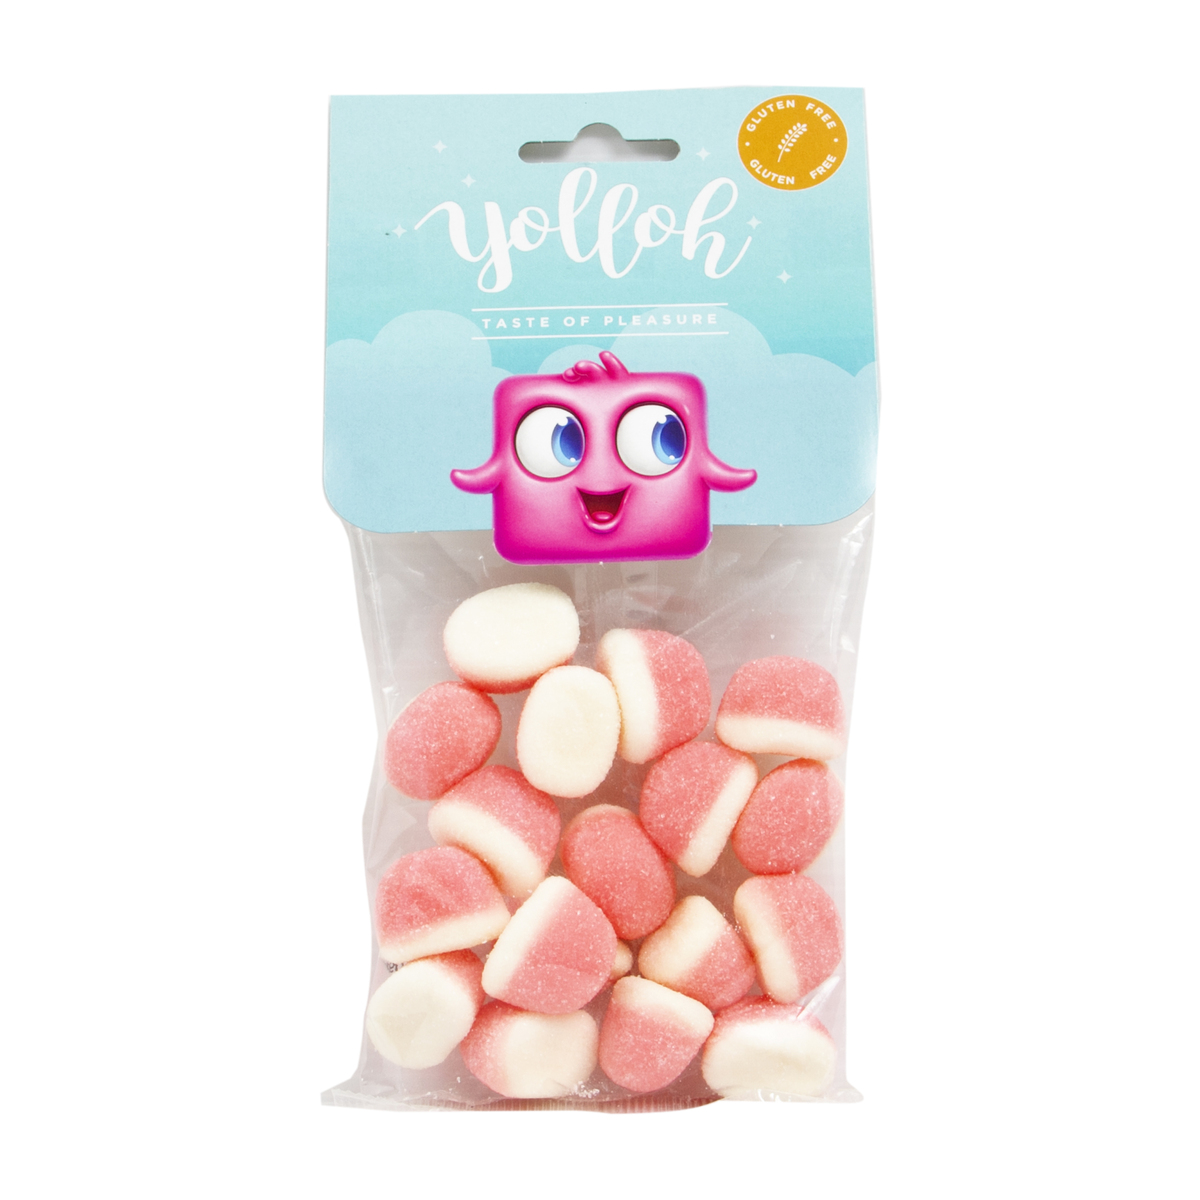 Yolloh Taste Of Pleasure Besitos 135g Candy Bags Lulu Kuwait 8754